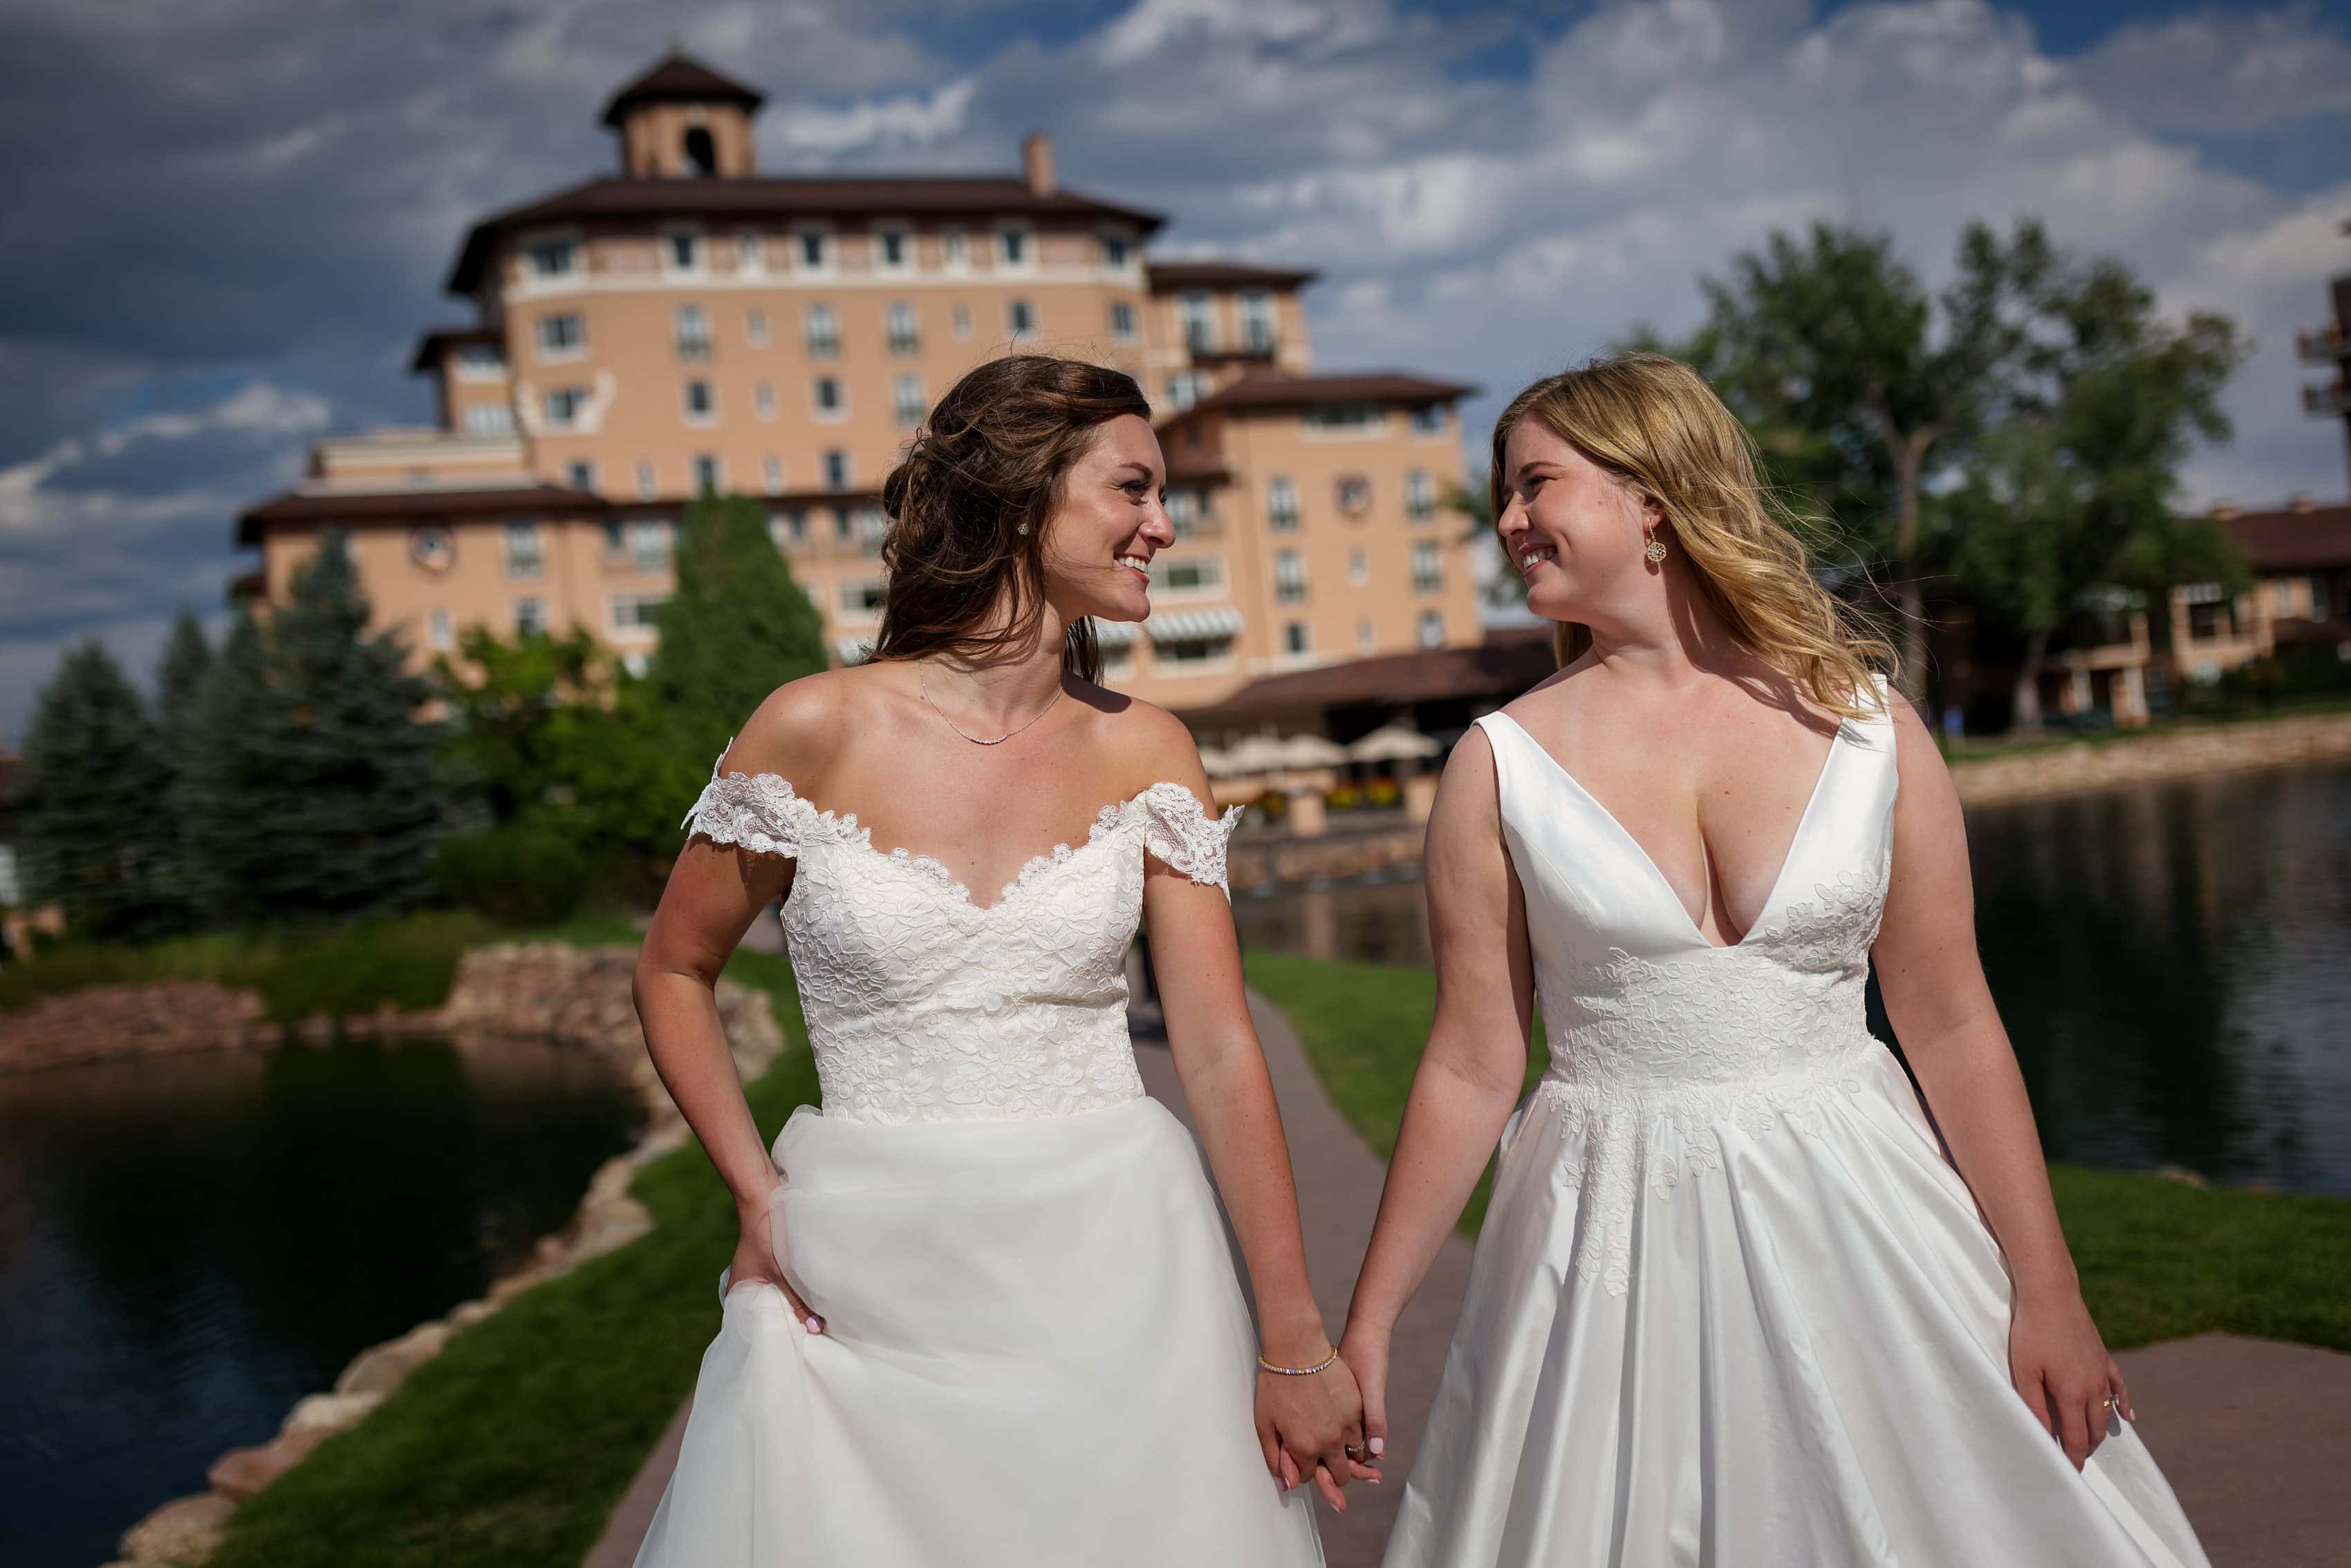 two brides walk together for wedding portraits at The Broadmoor in Colorado Springs, Colorado